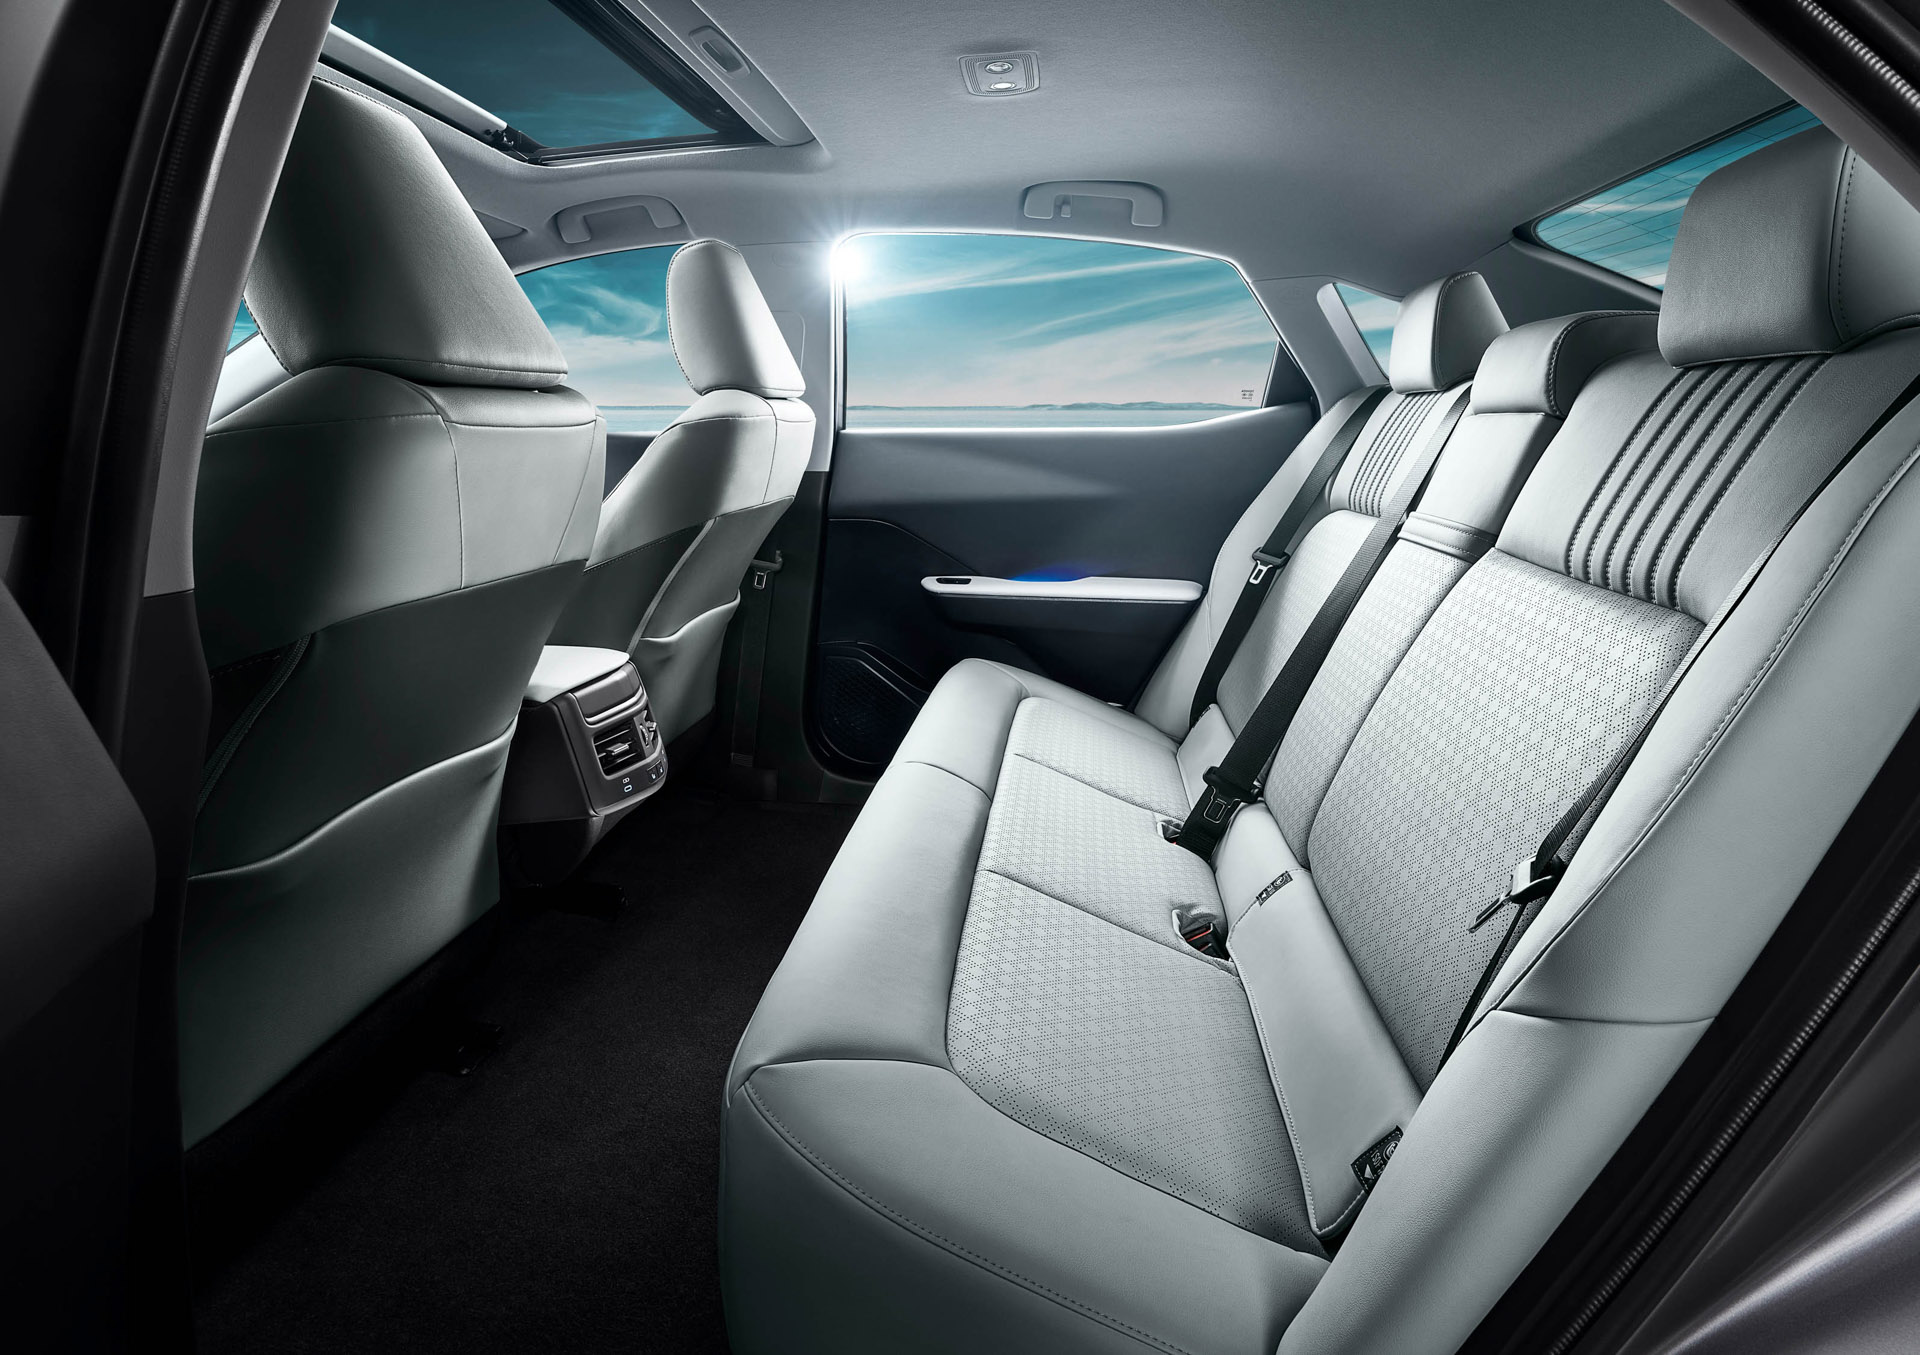 Toyota bZ3 interior - Seats